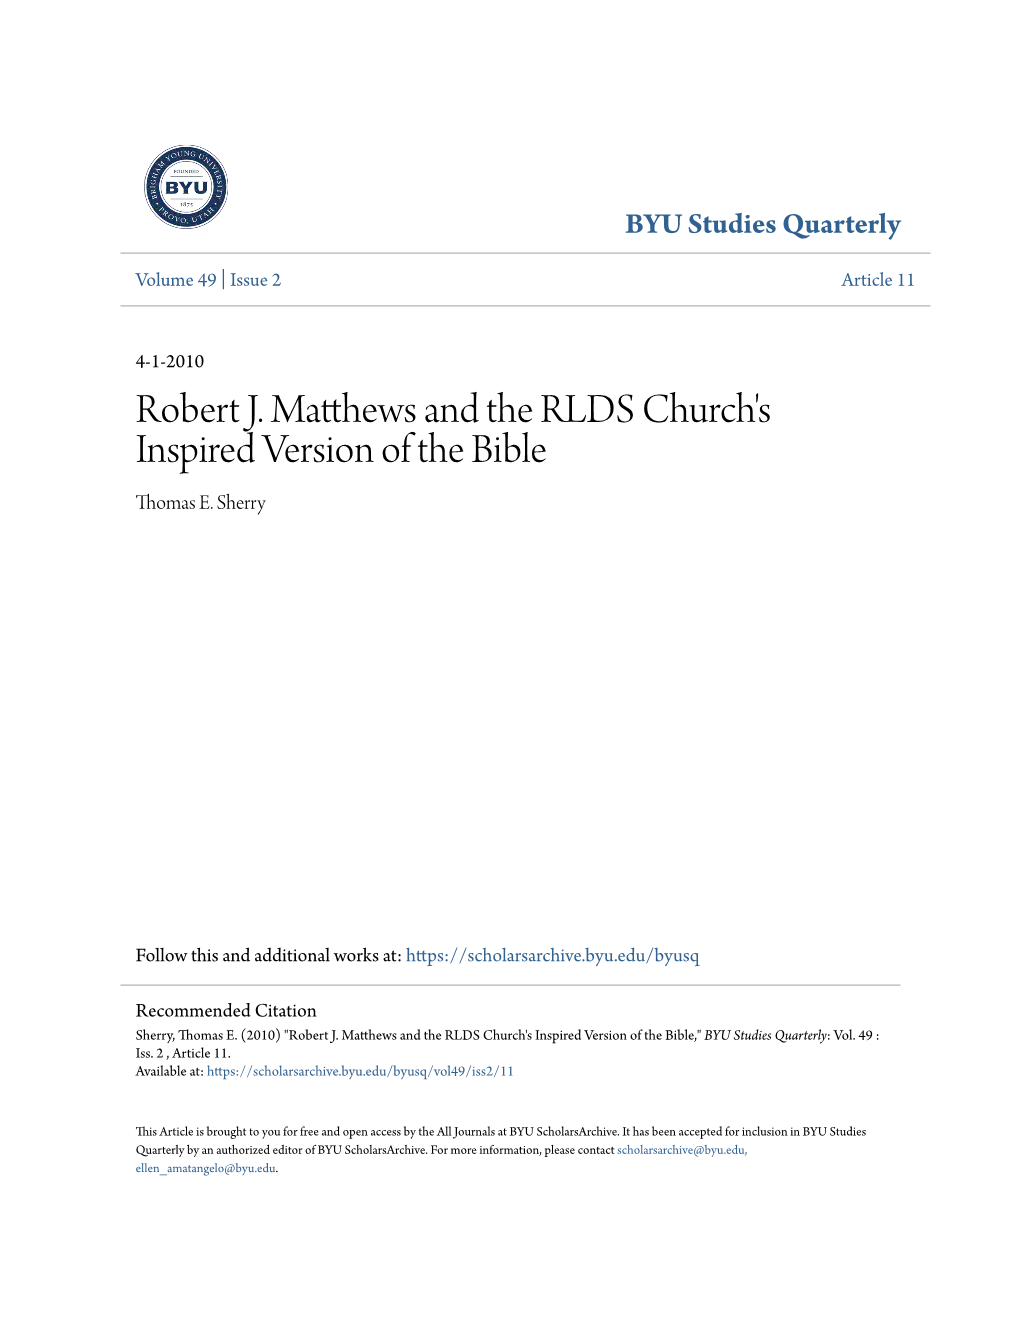 Robert J. Matthews and the RLDS Church's Inspired Version of the Bible Thomas E